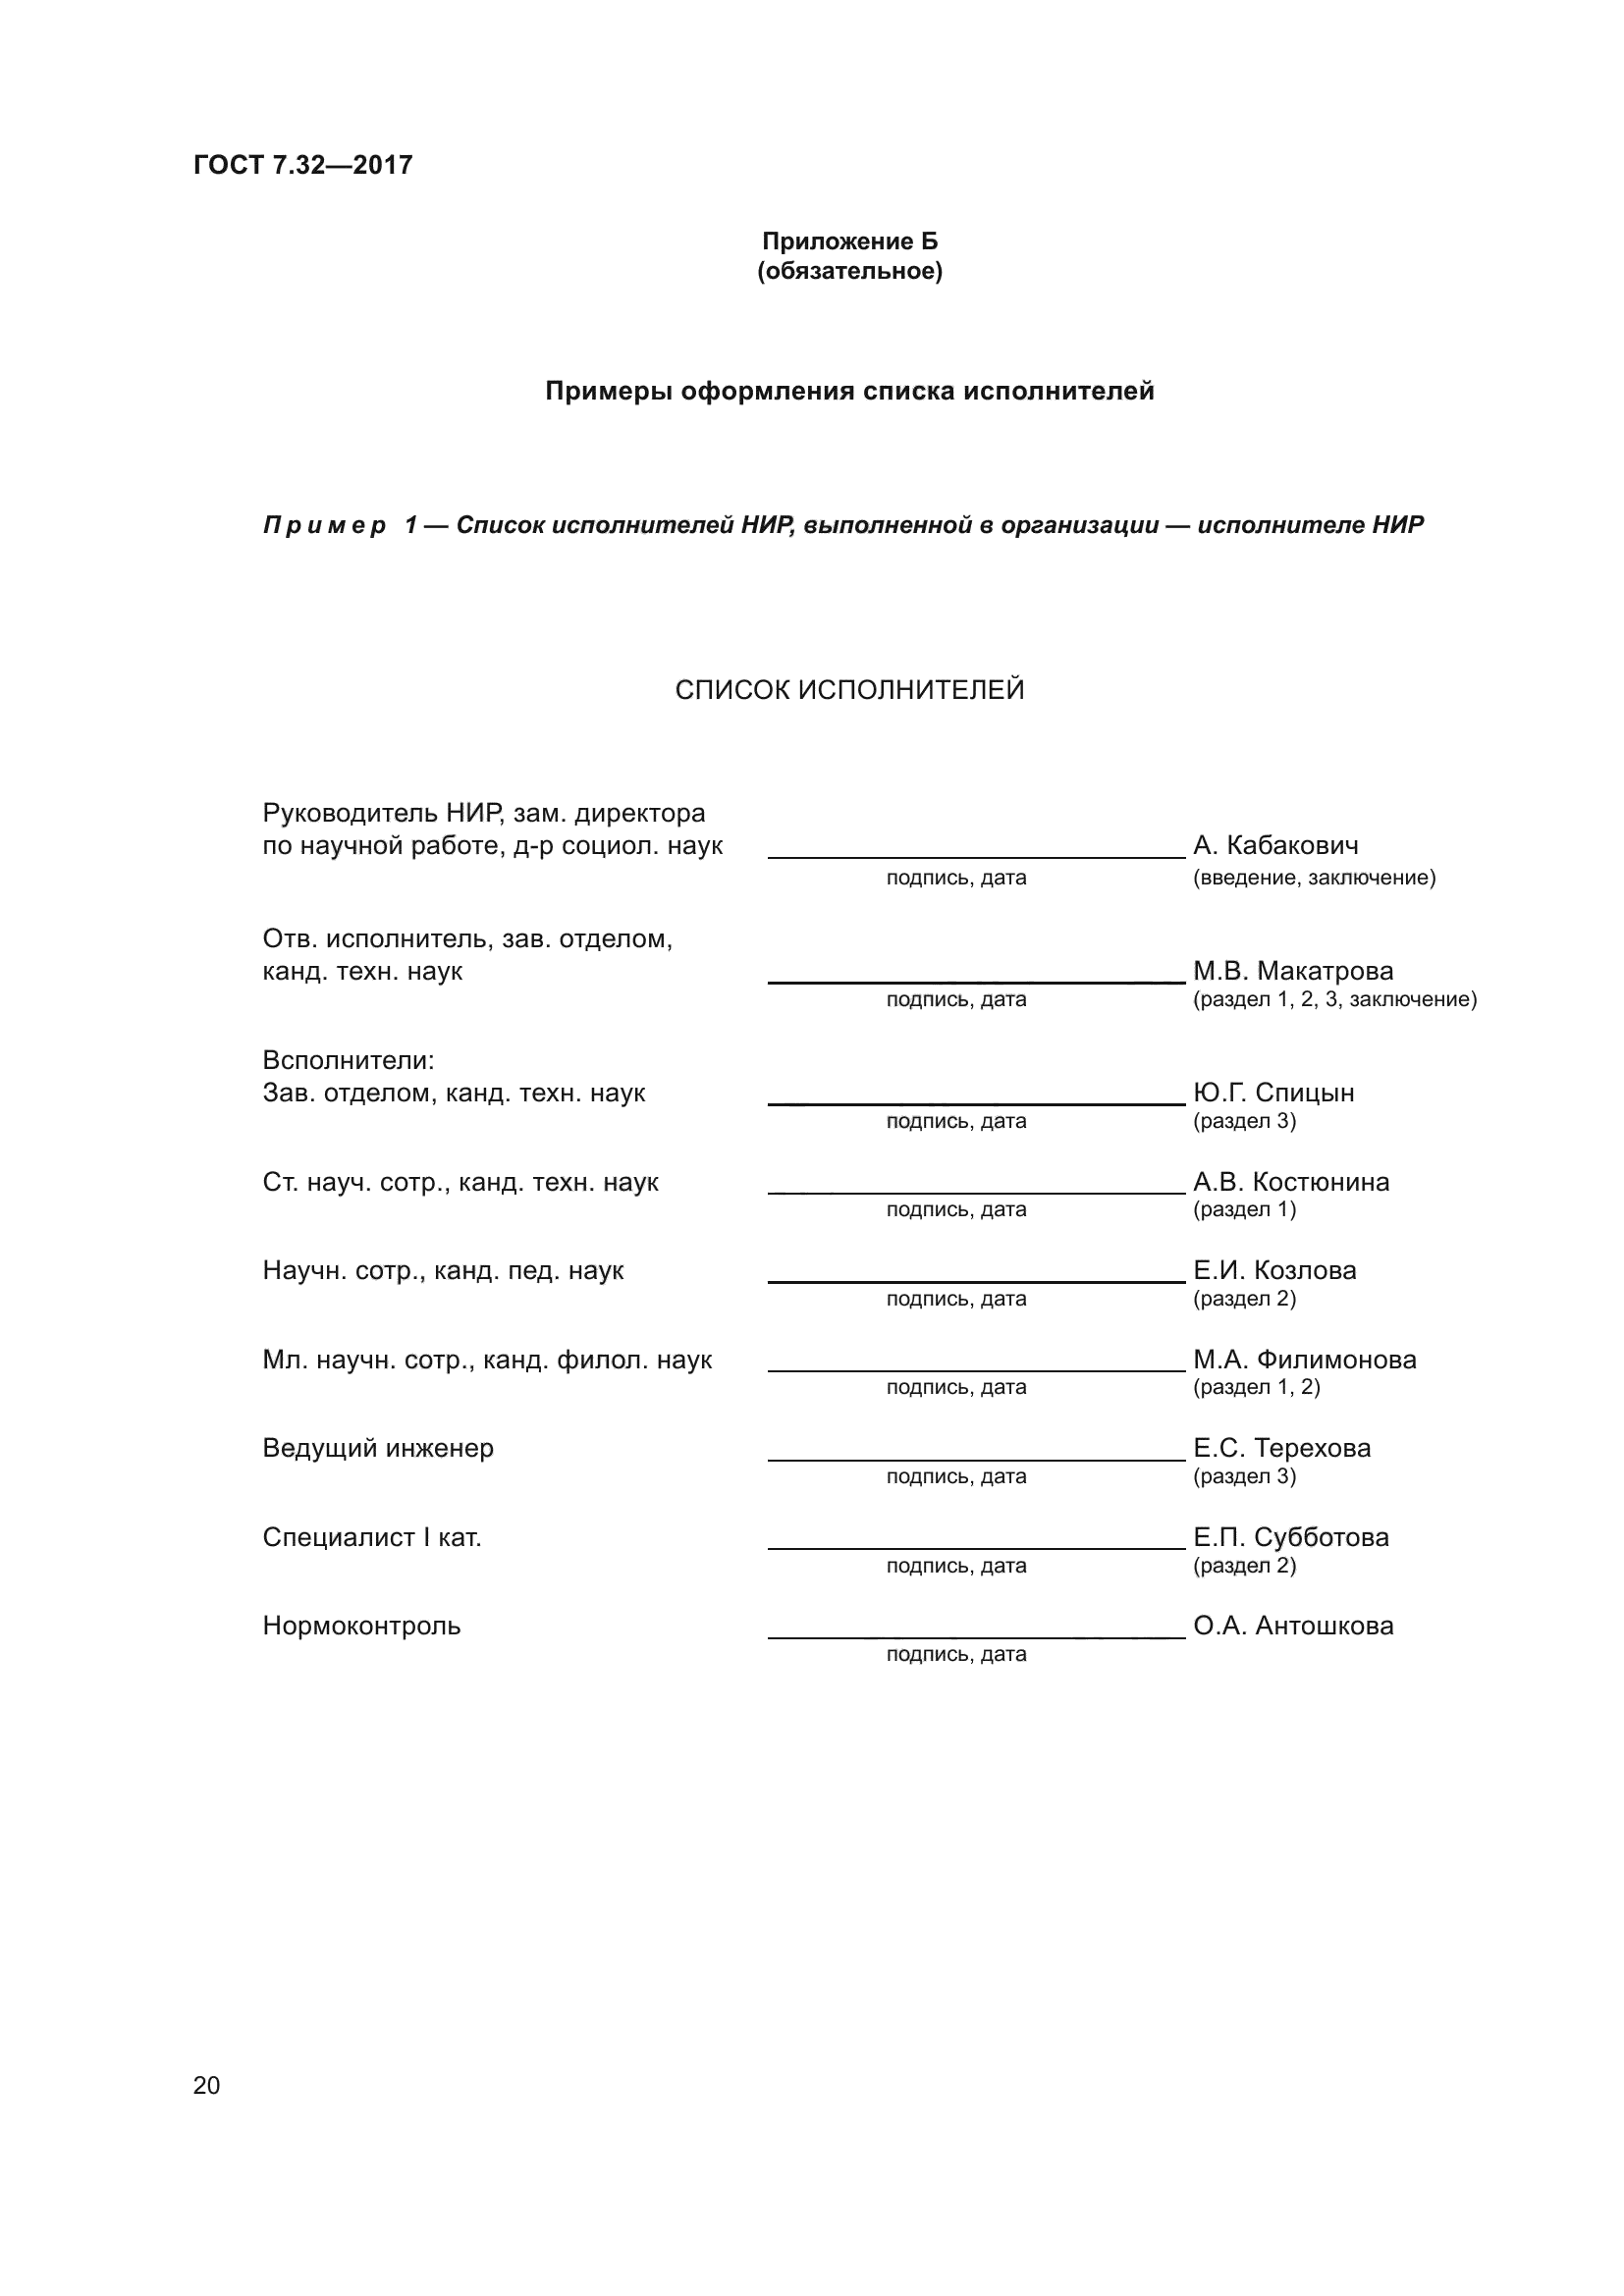 Реферат Гост 7.32-2001 Пример